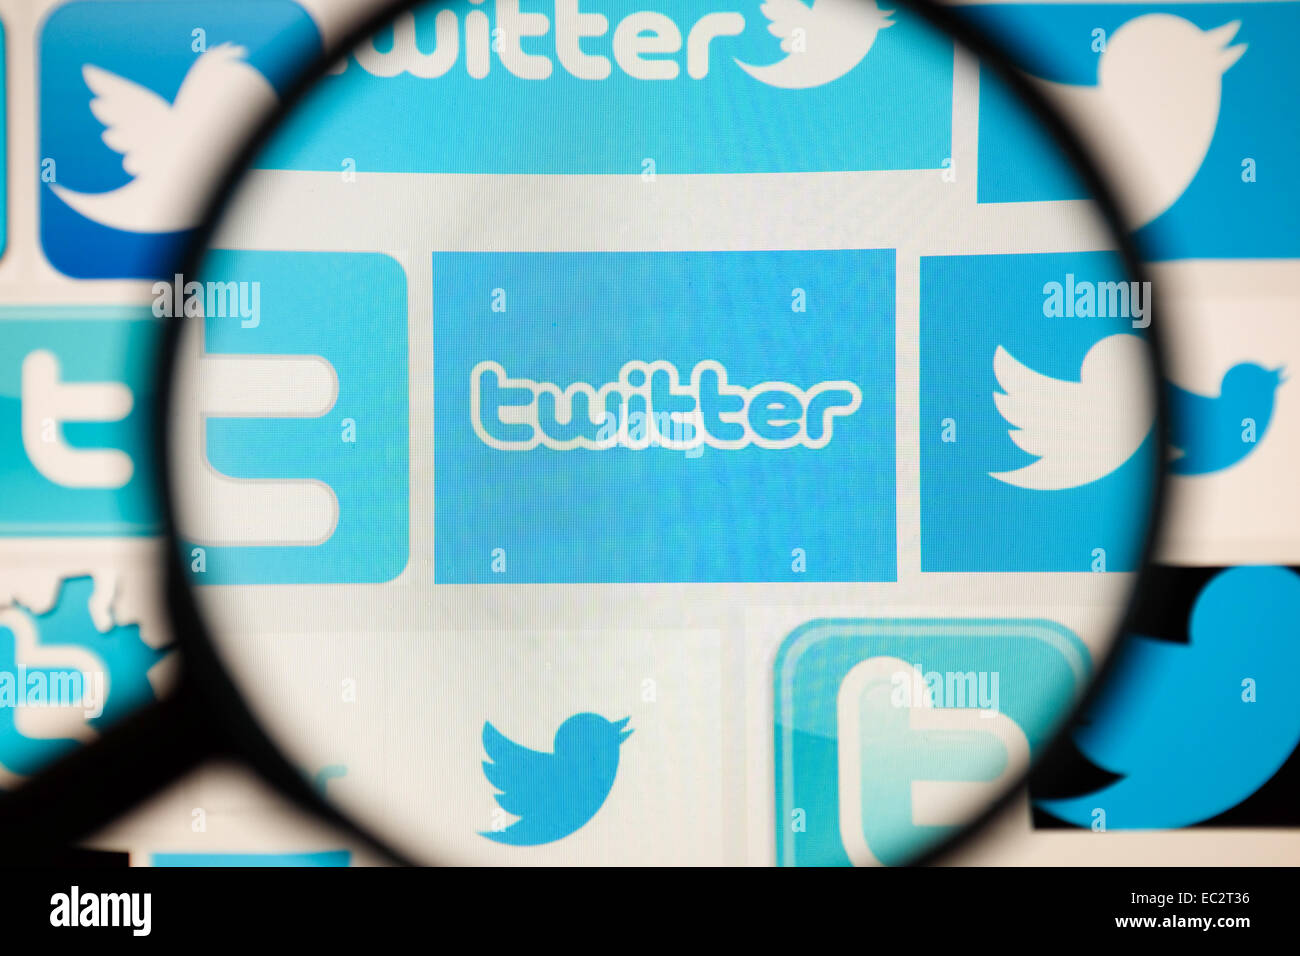 Twitter logo shown through a magnifying glass. Stock Photo